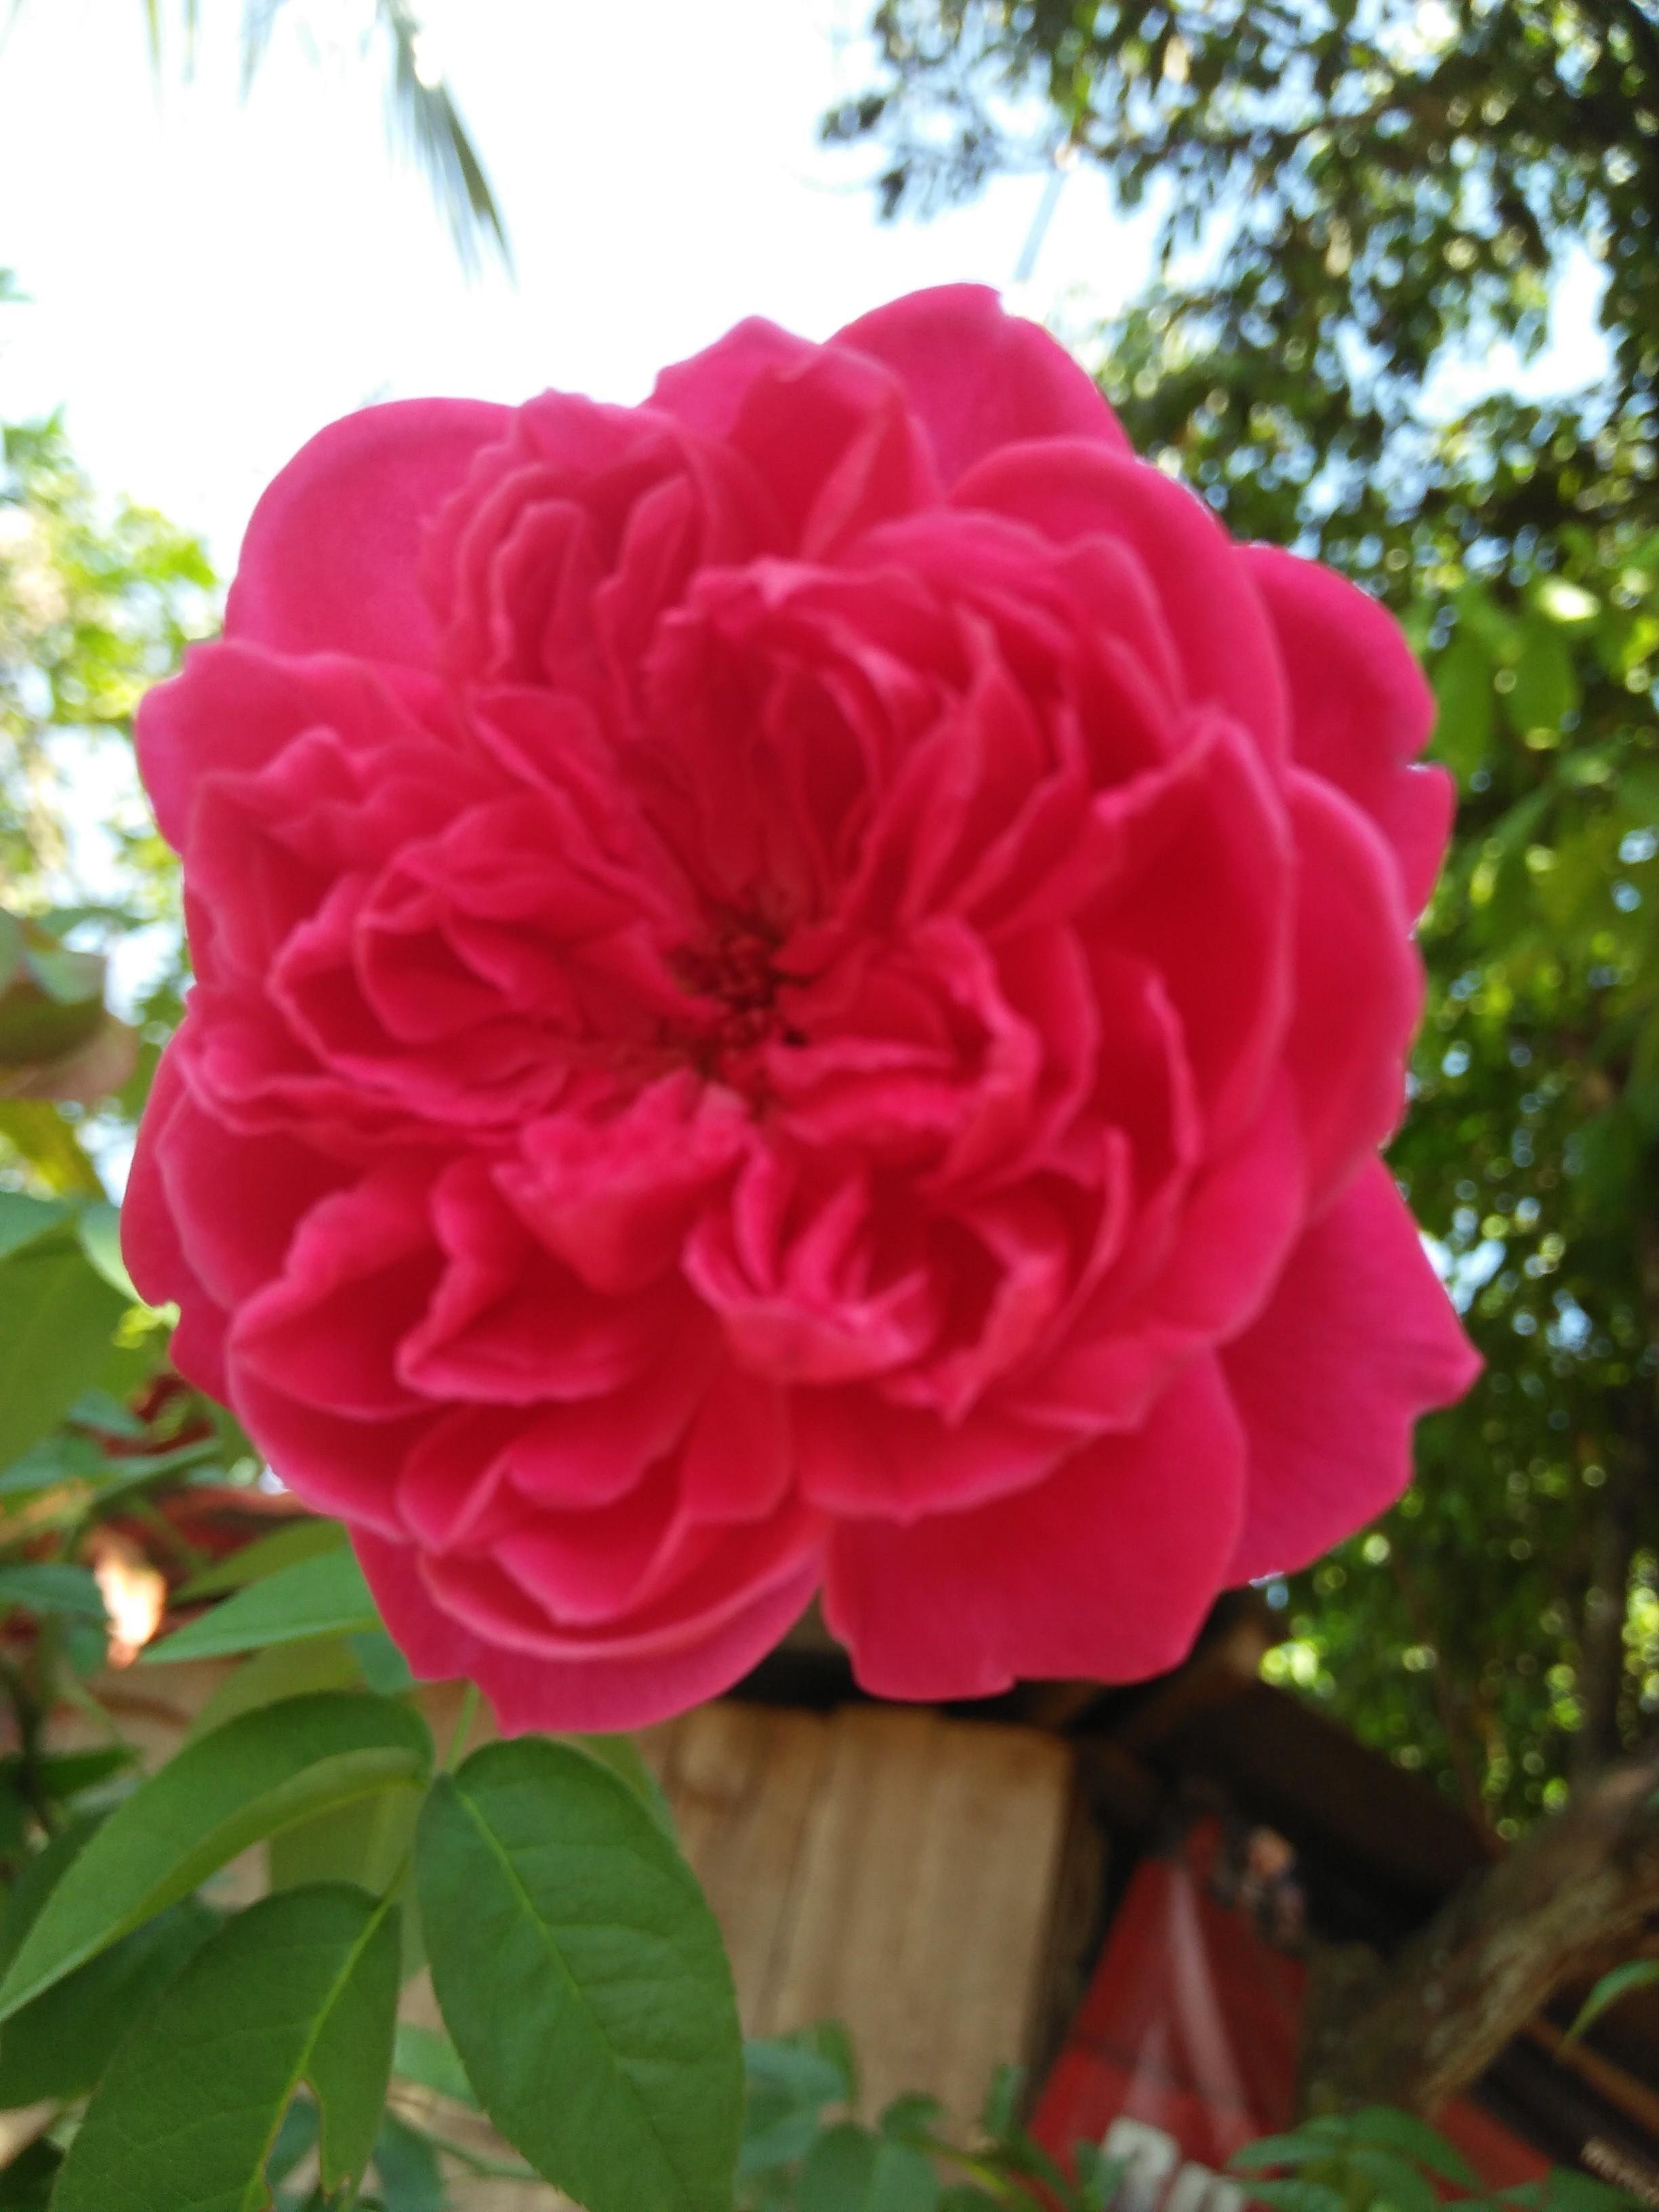  Gambar  Bunga Mawar  Berduri  Pickini